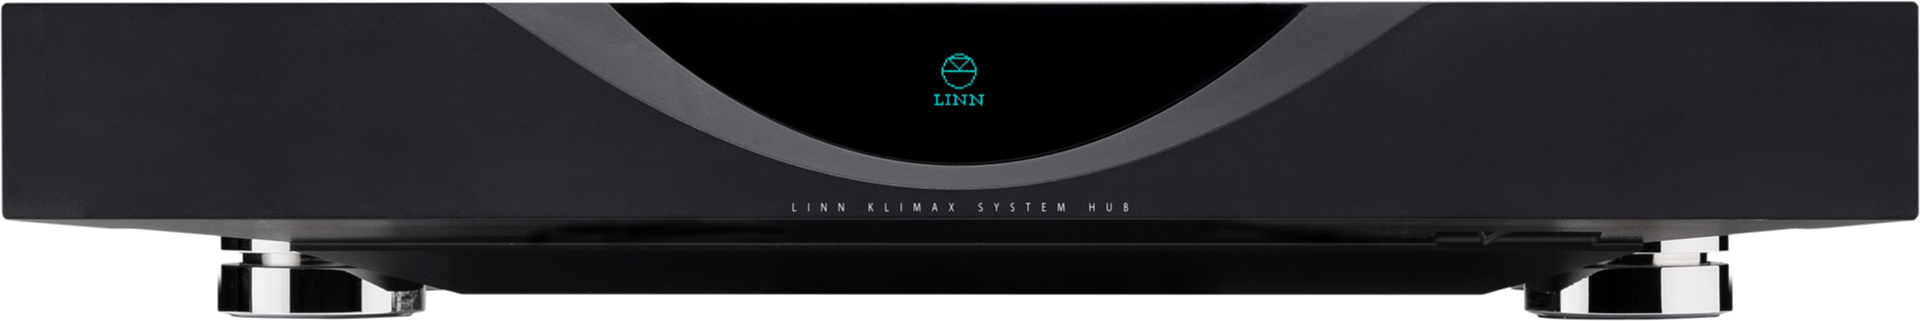 Linn Klimax System Hub.1